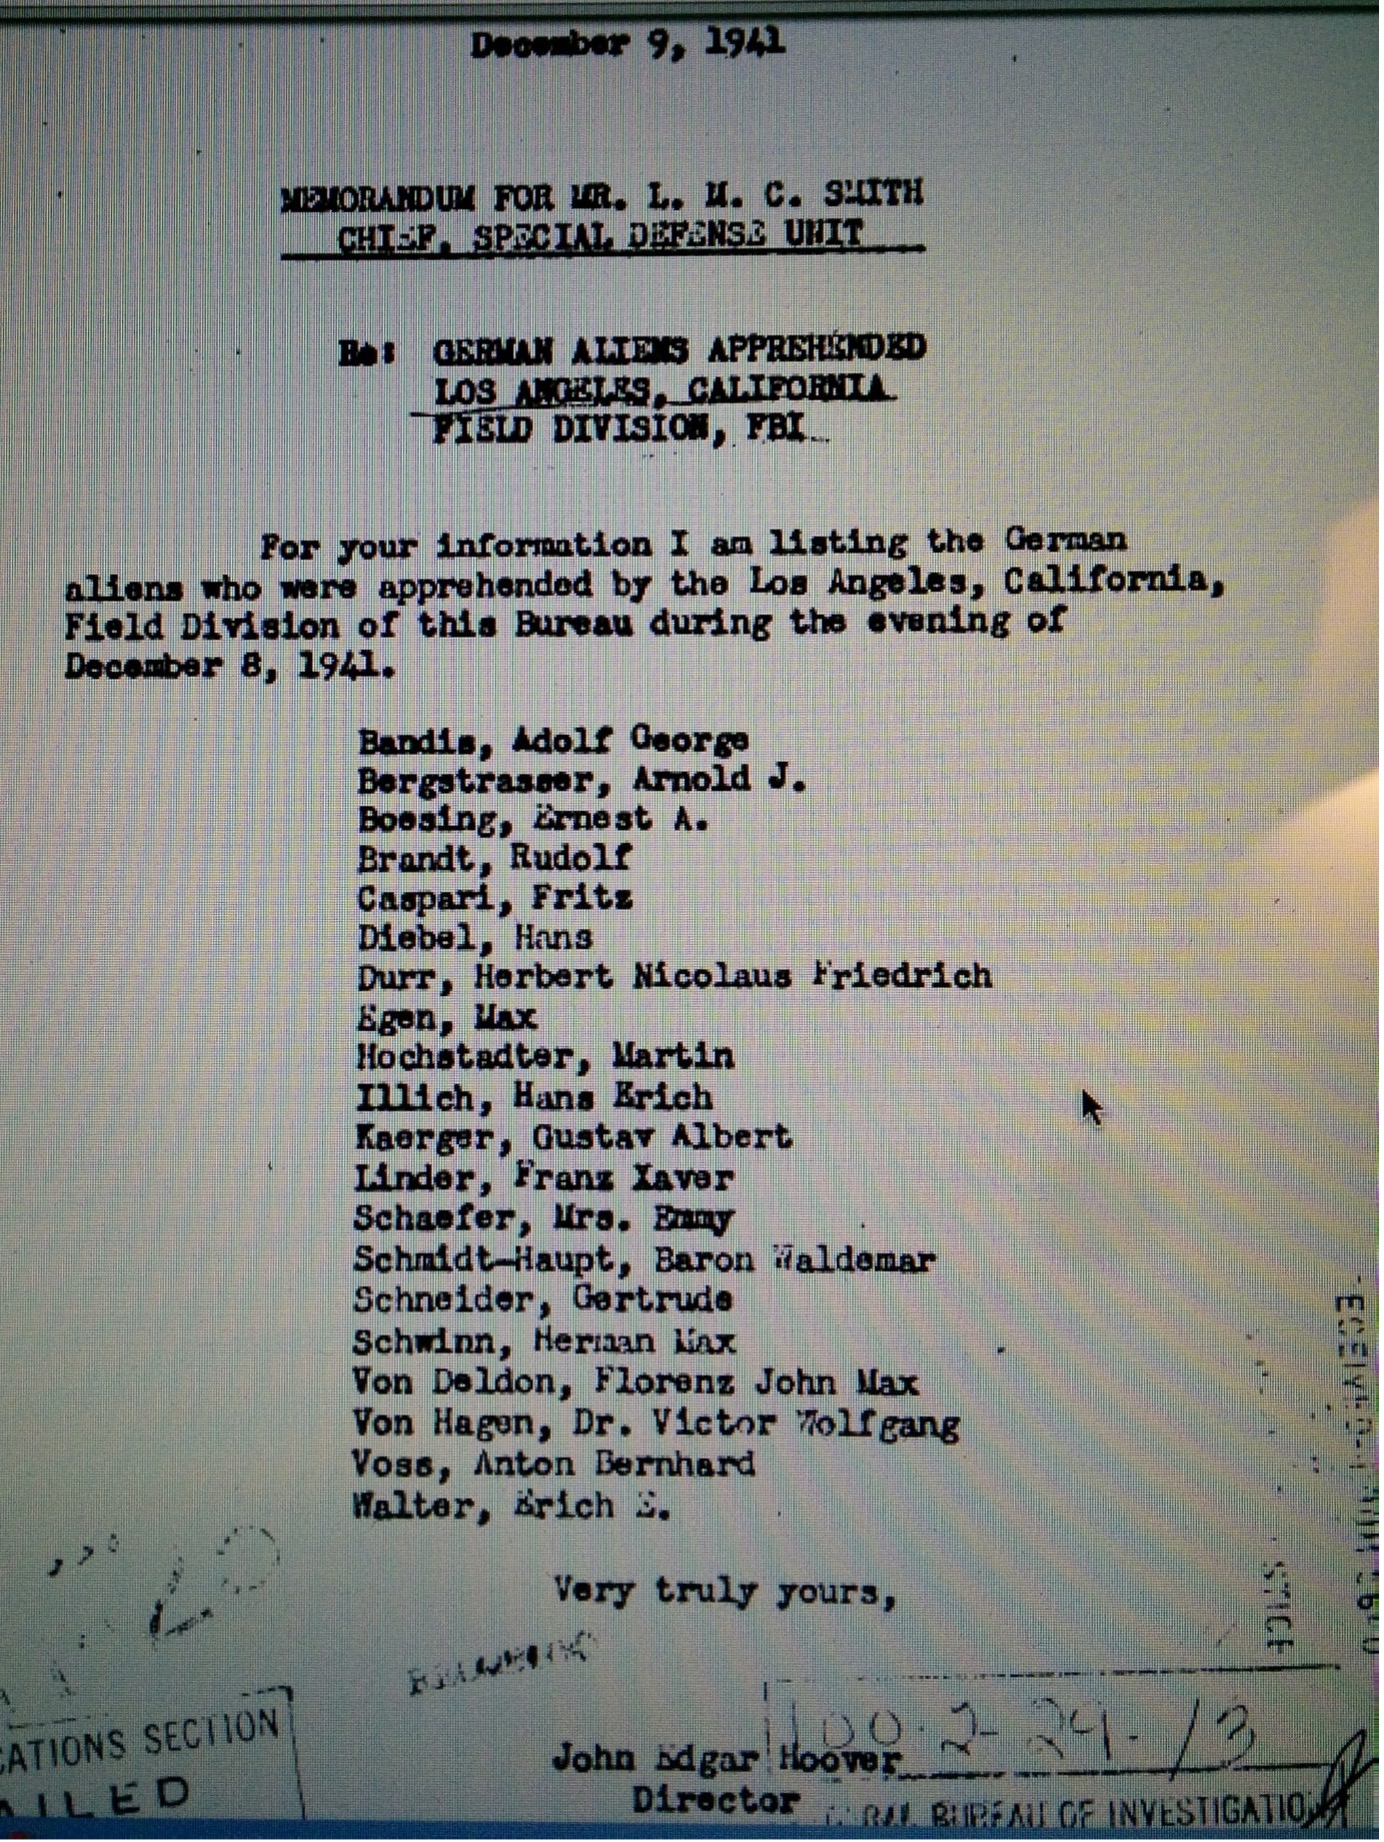 German aliens arrest list sent by J Edgar Hoover, FBI Director to FBI Los Angeles, 9 December 1941